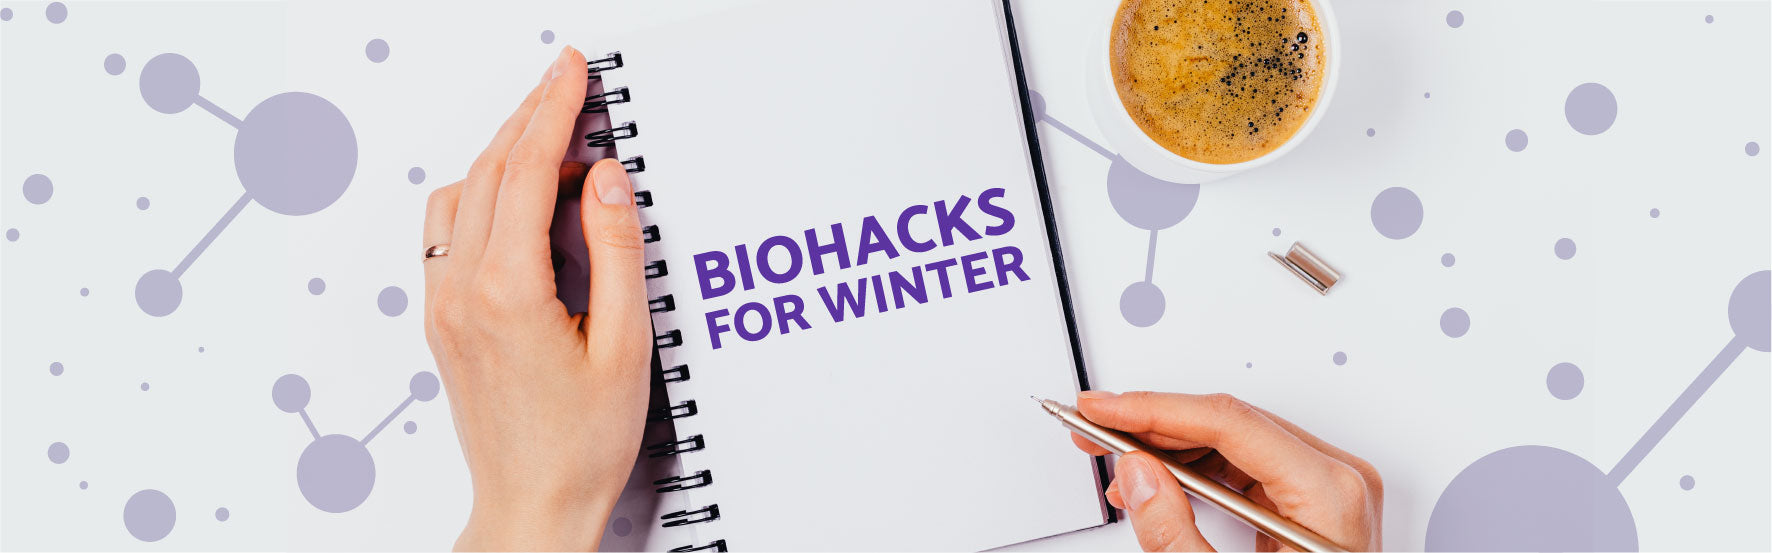 Biohacks For Winter | Articles | OPTMZ | 